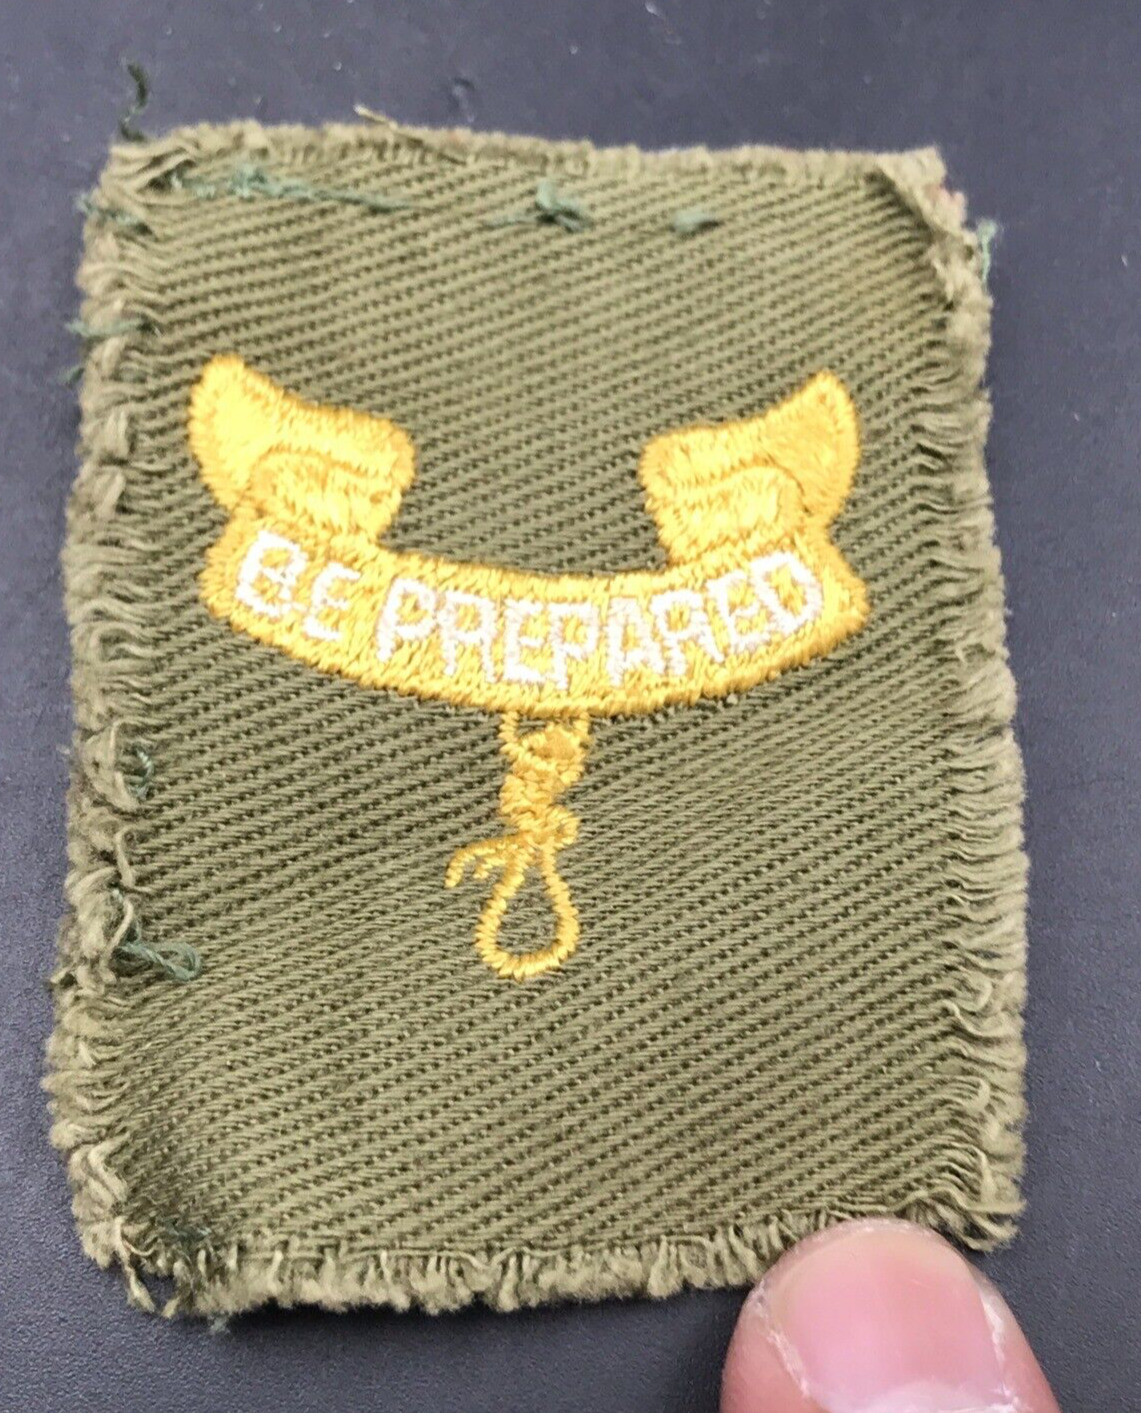 Boy Scouts BSA Second Class Patrol Leader Insignia Cloth Rank Badge Patch Khaki